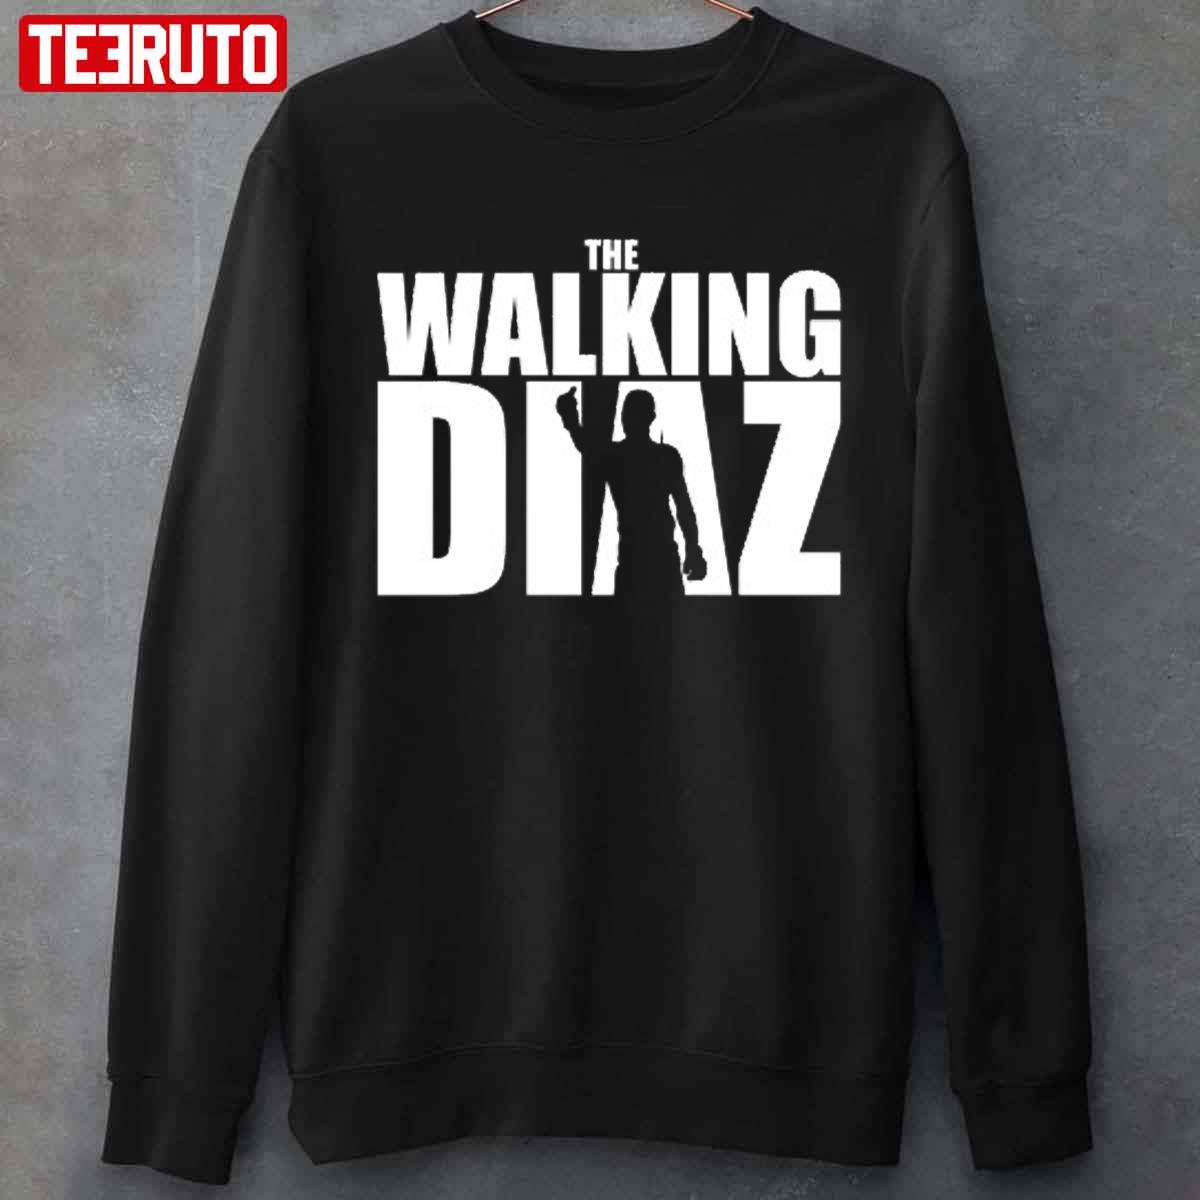 The Walking Diaz Nate Diaz Mma Ufc The Walking Dead Unisex Sweatshirt